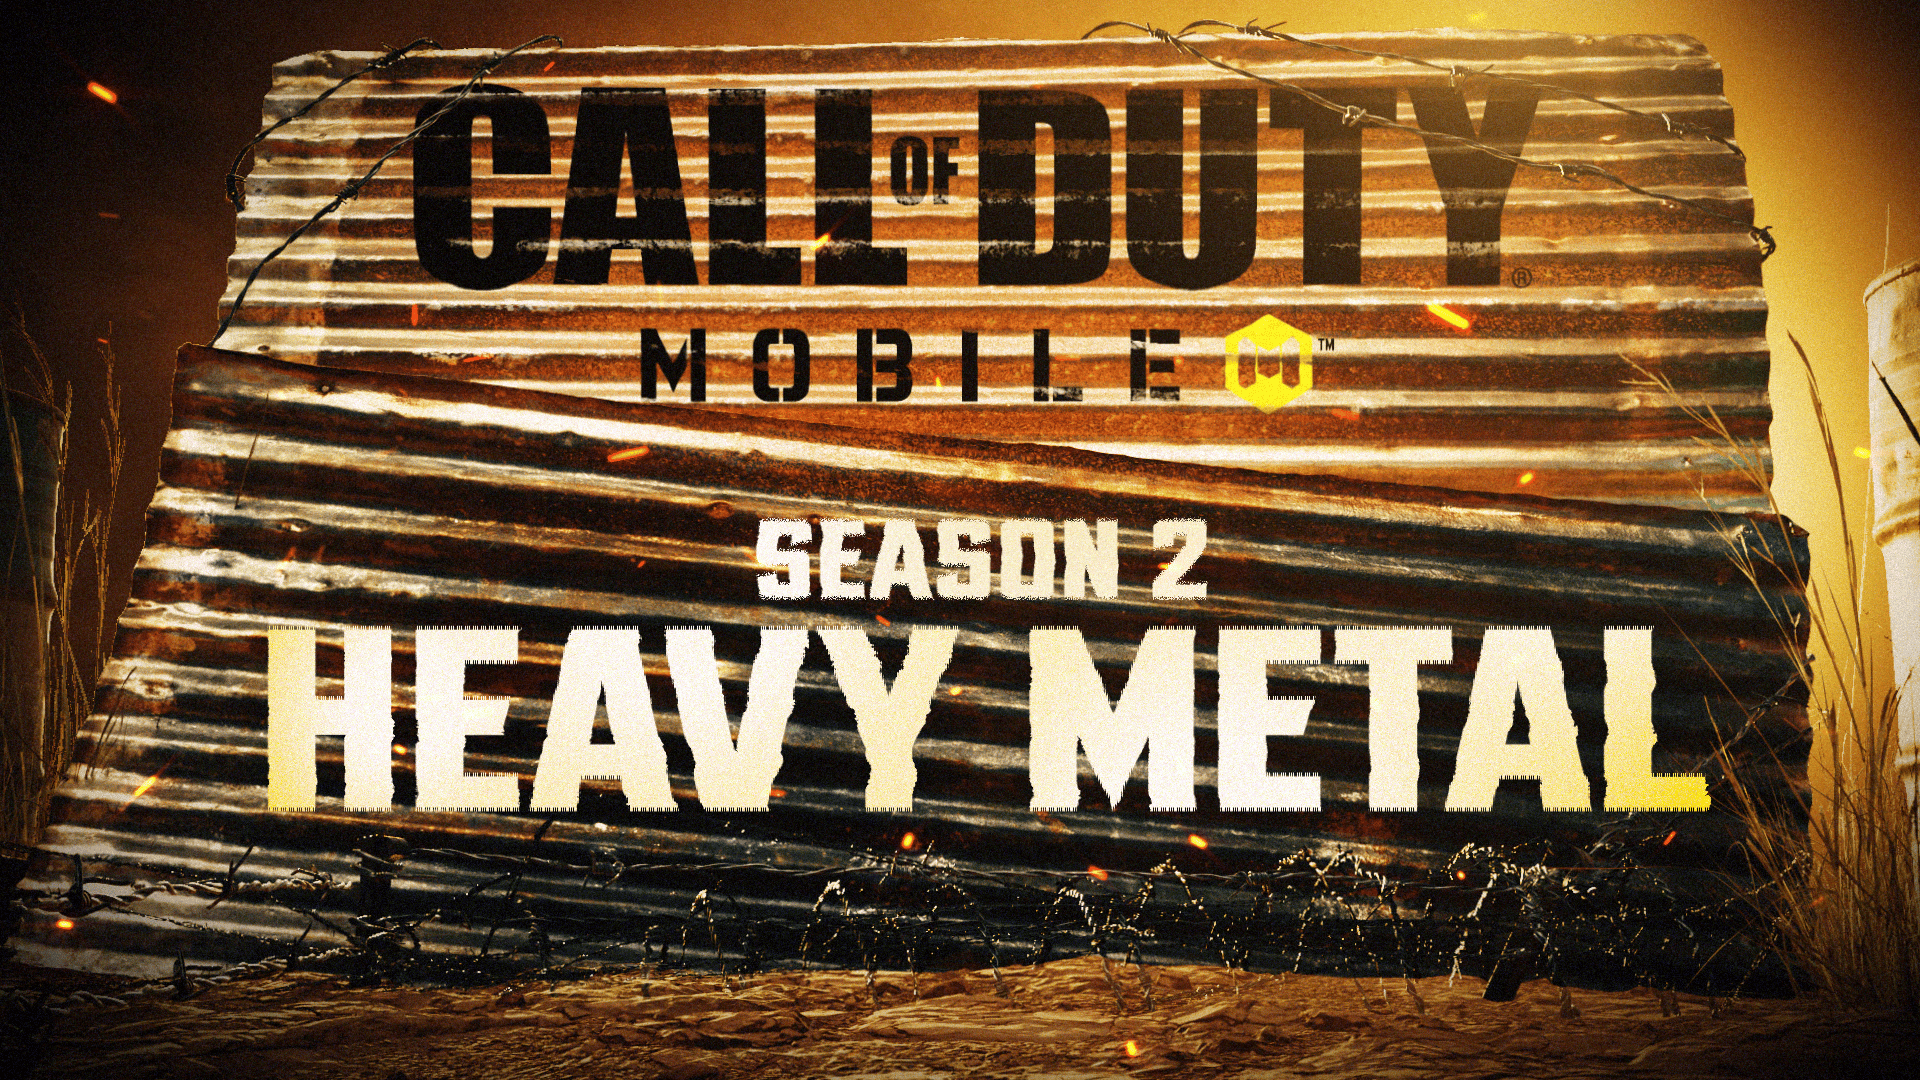 call of duty mobile season 2 heavy metal